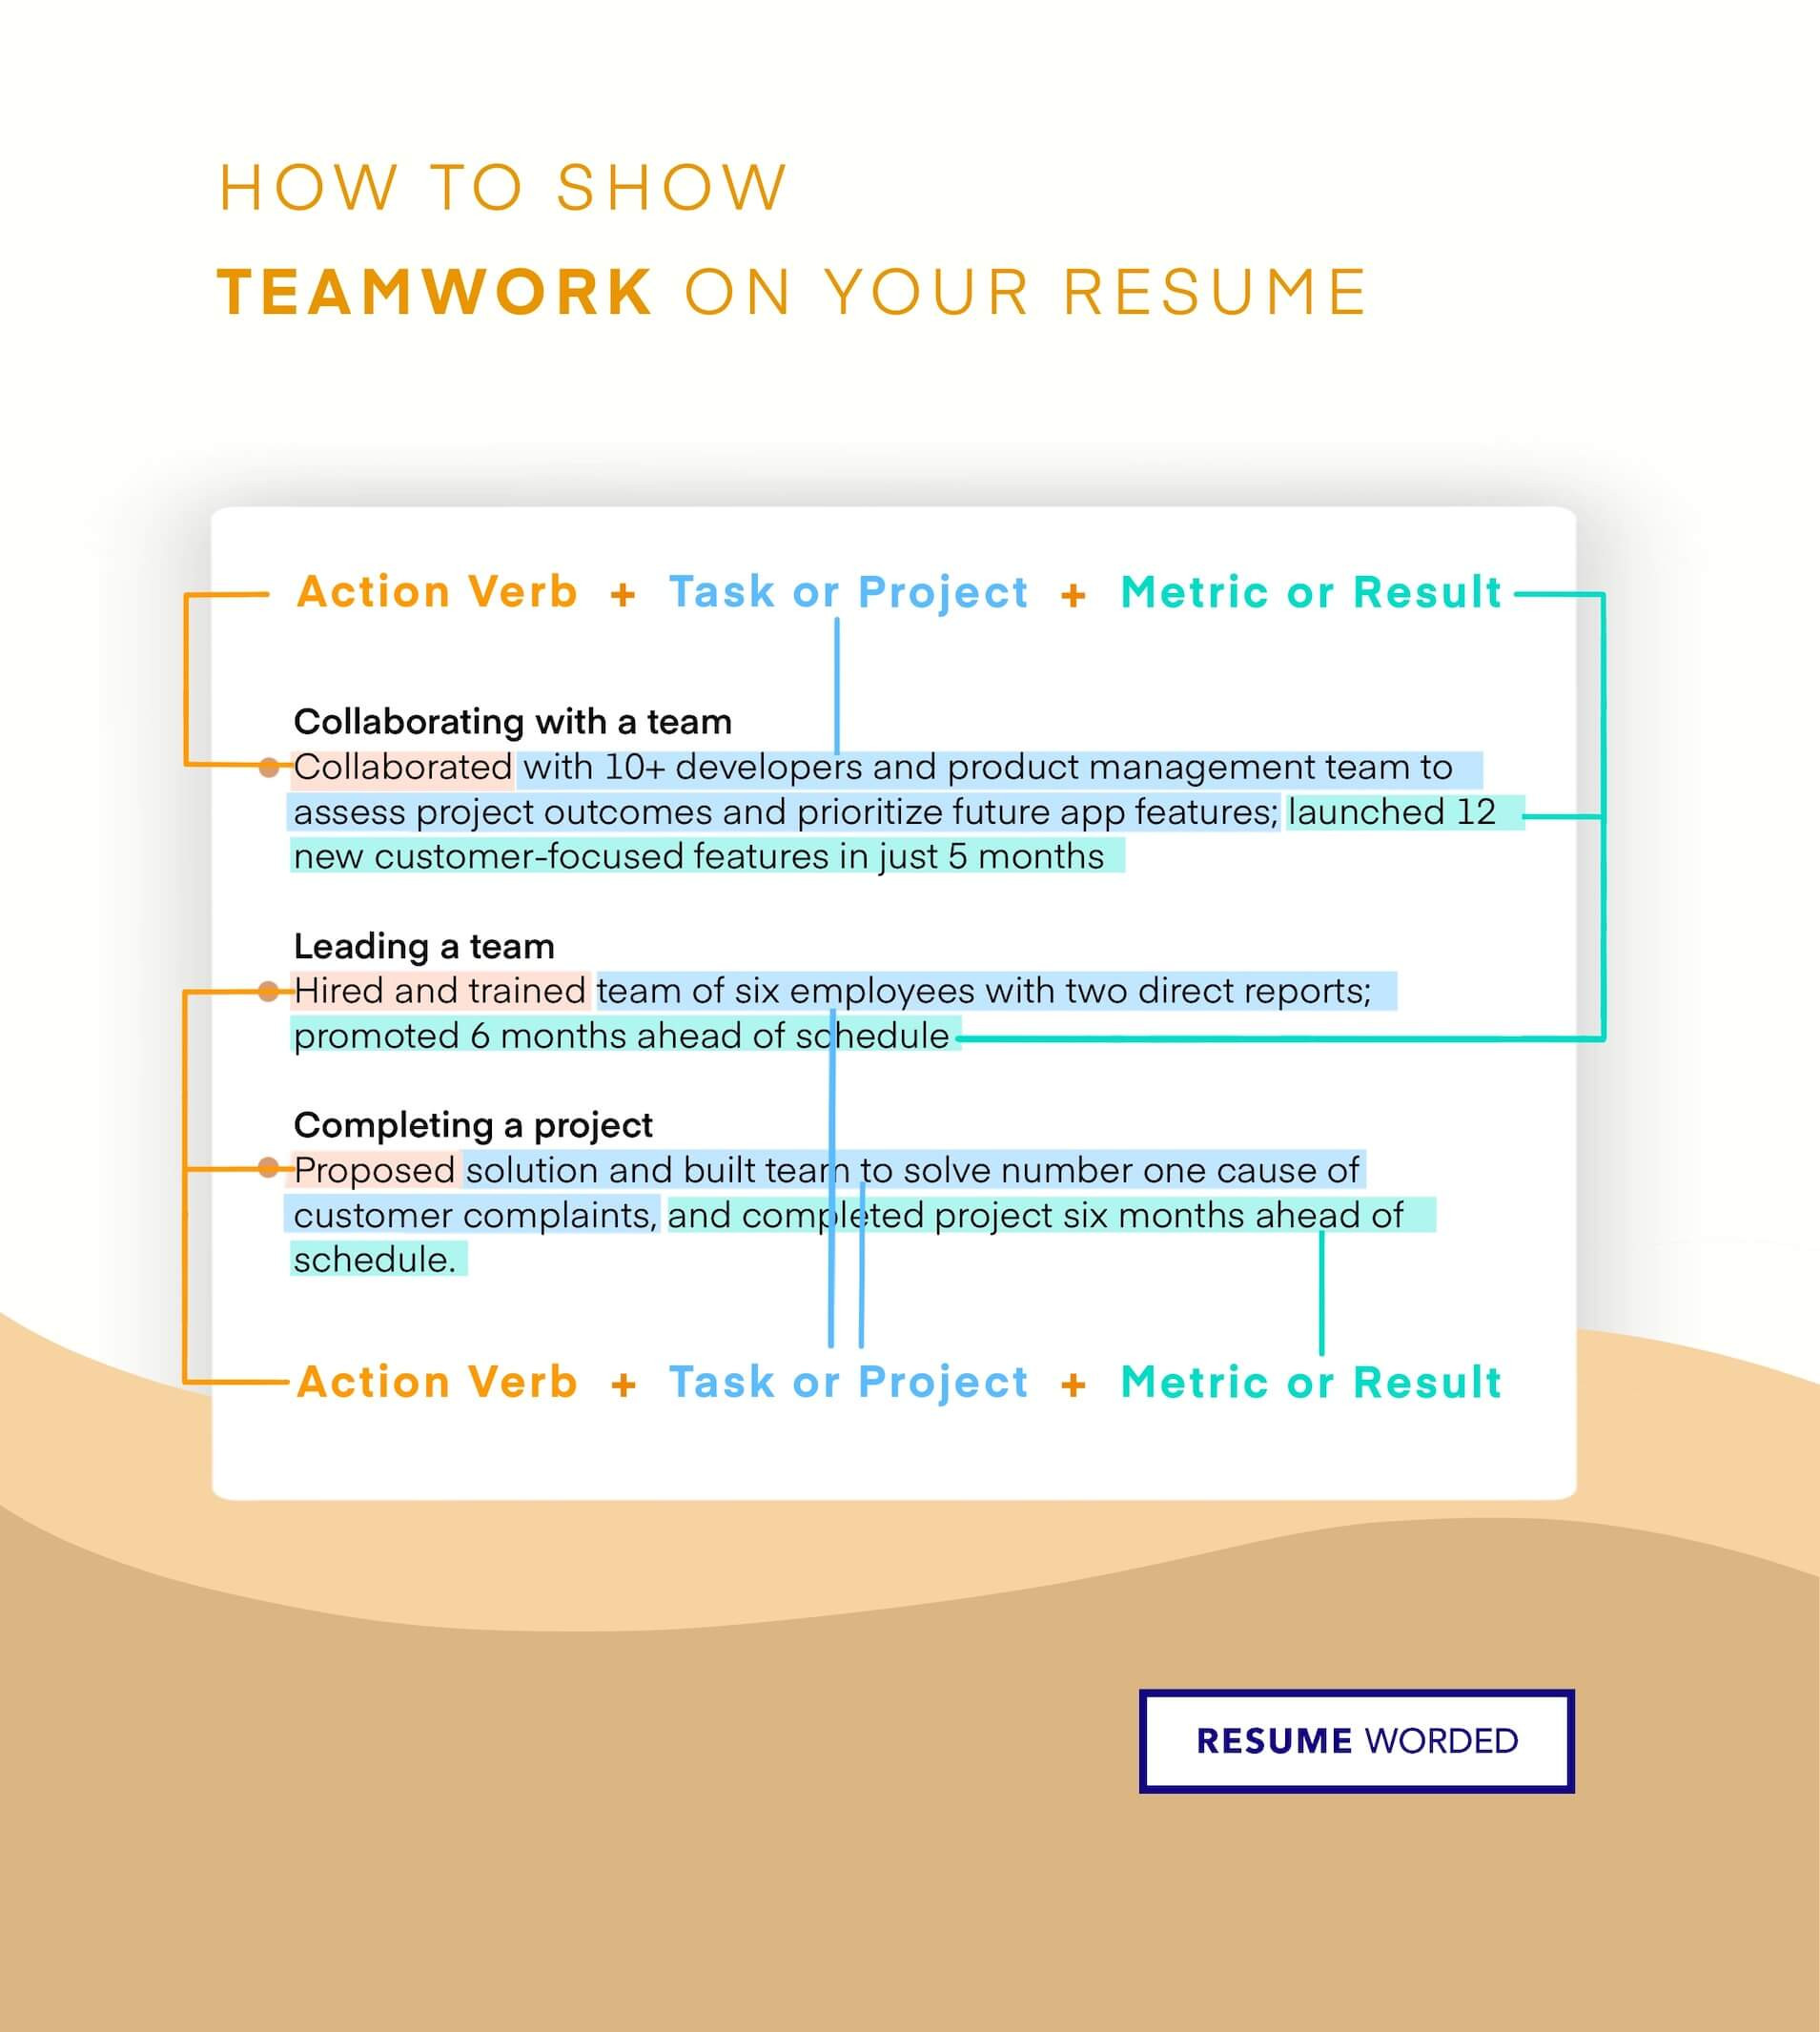 Resume Sample for Basing It In Job Environment 4 Risk Management Resume Examples for 2022 Resume Worded